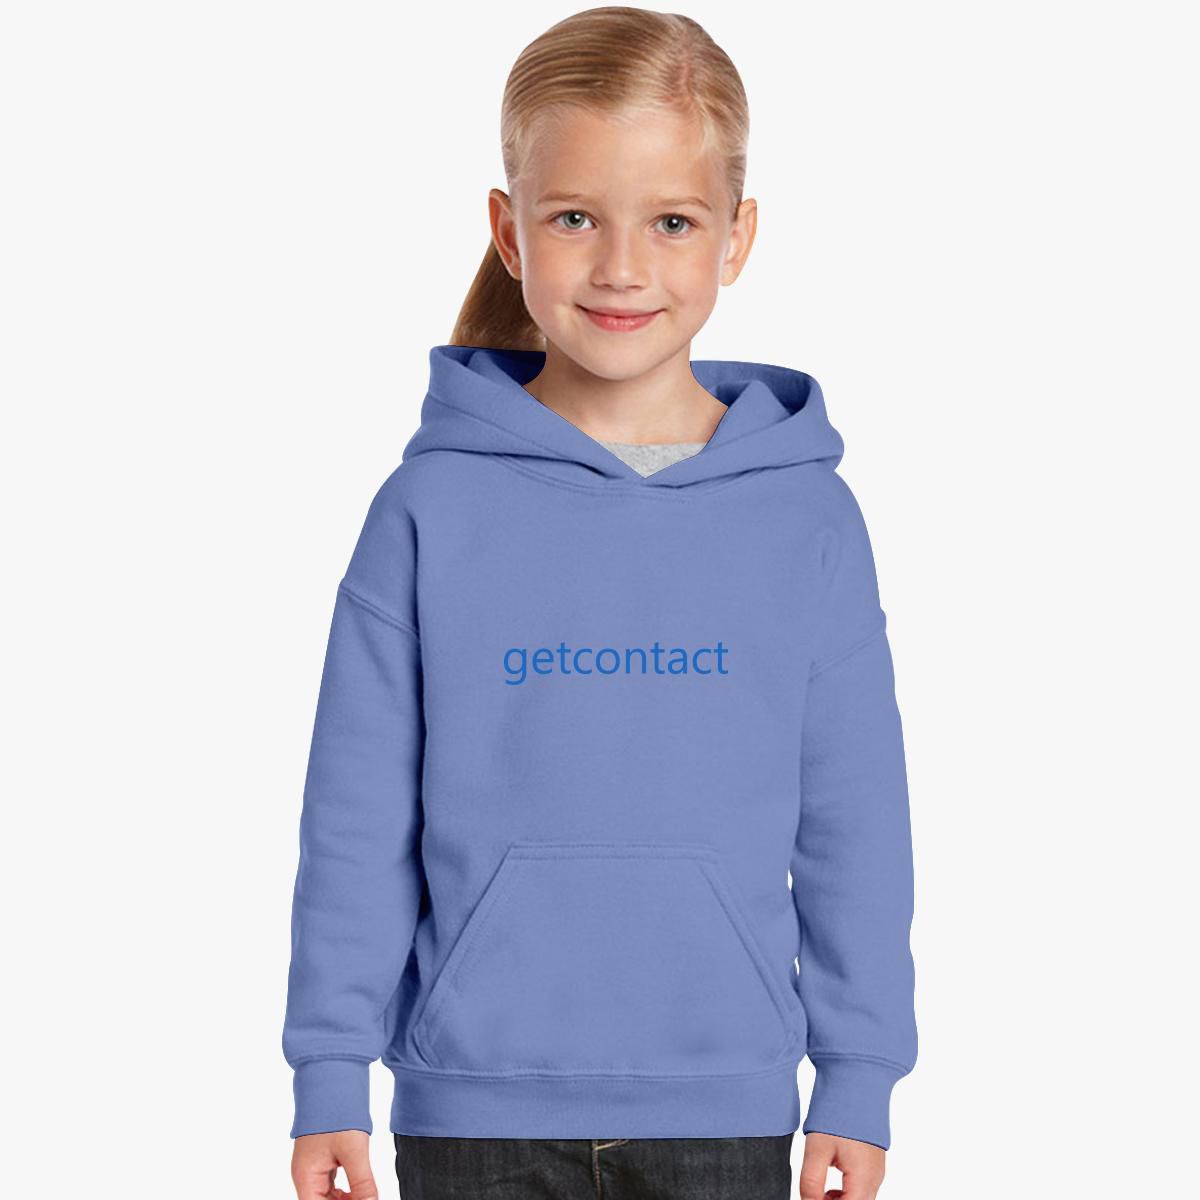 getcontact logo Kids Hoodie - Customon.com